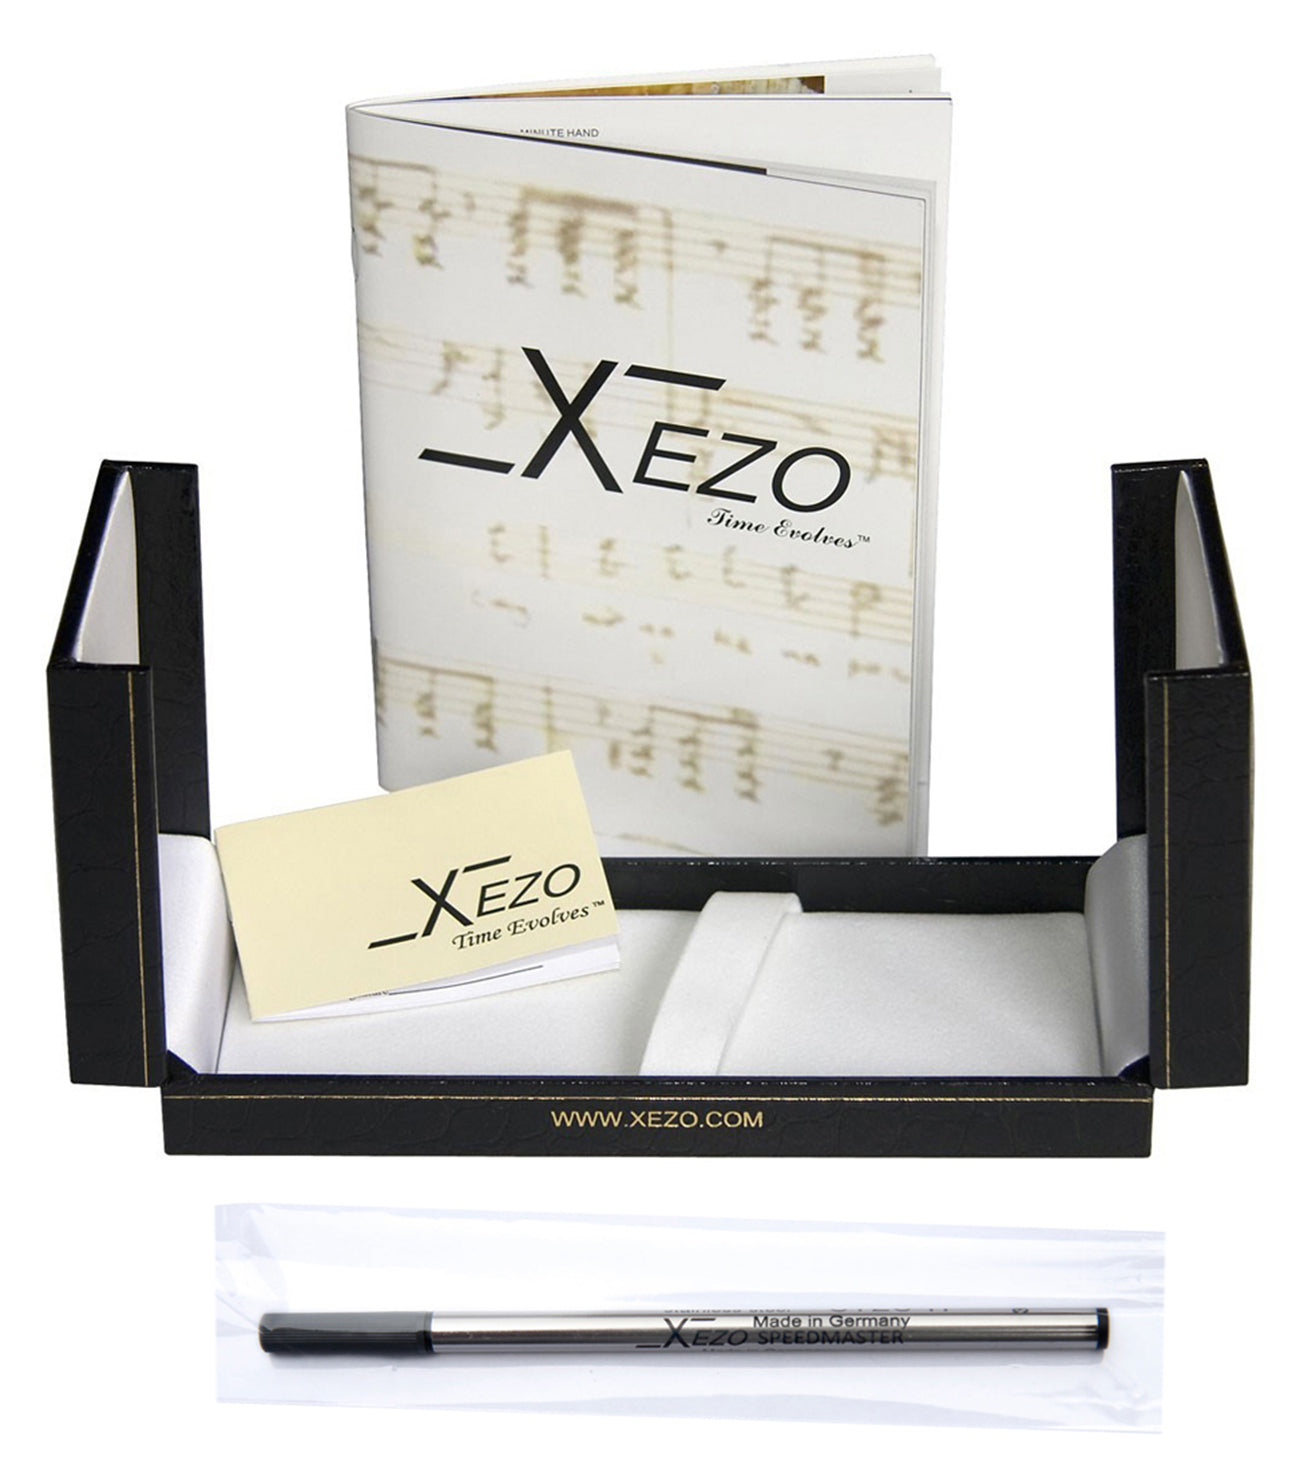 Xezo - Black gift box, certificate, manual, and gel ink cartridge of the Tribune Platinum R rollerball pen